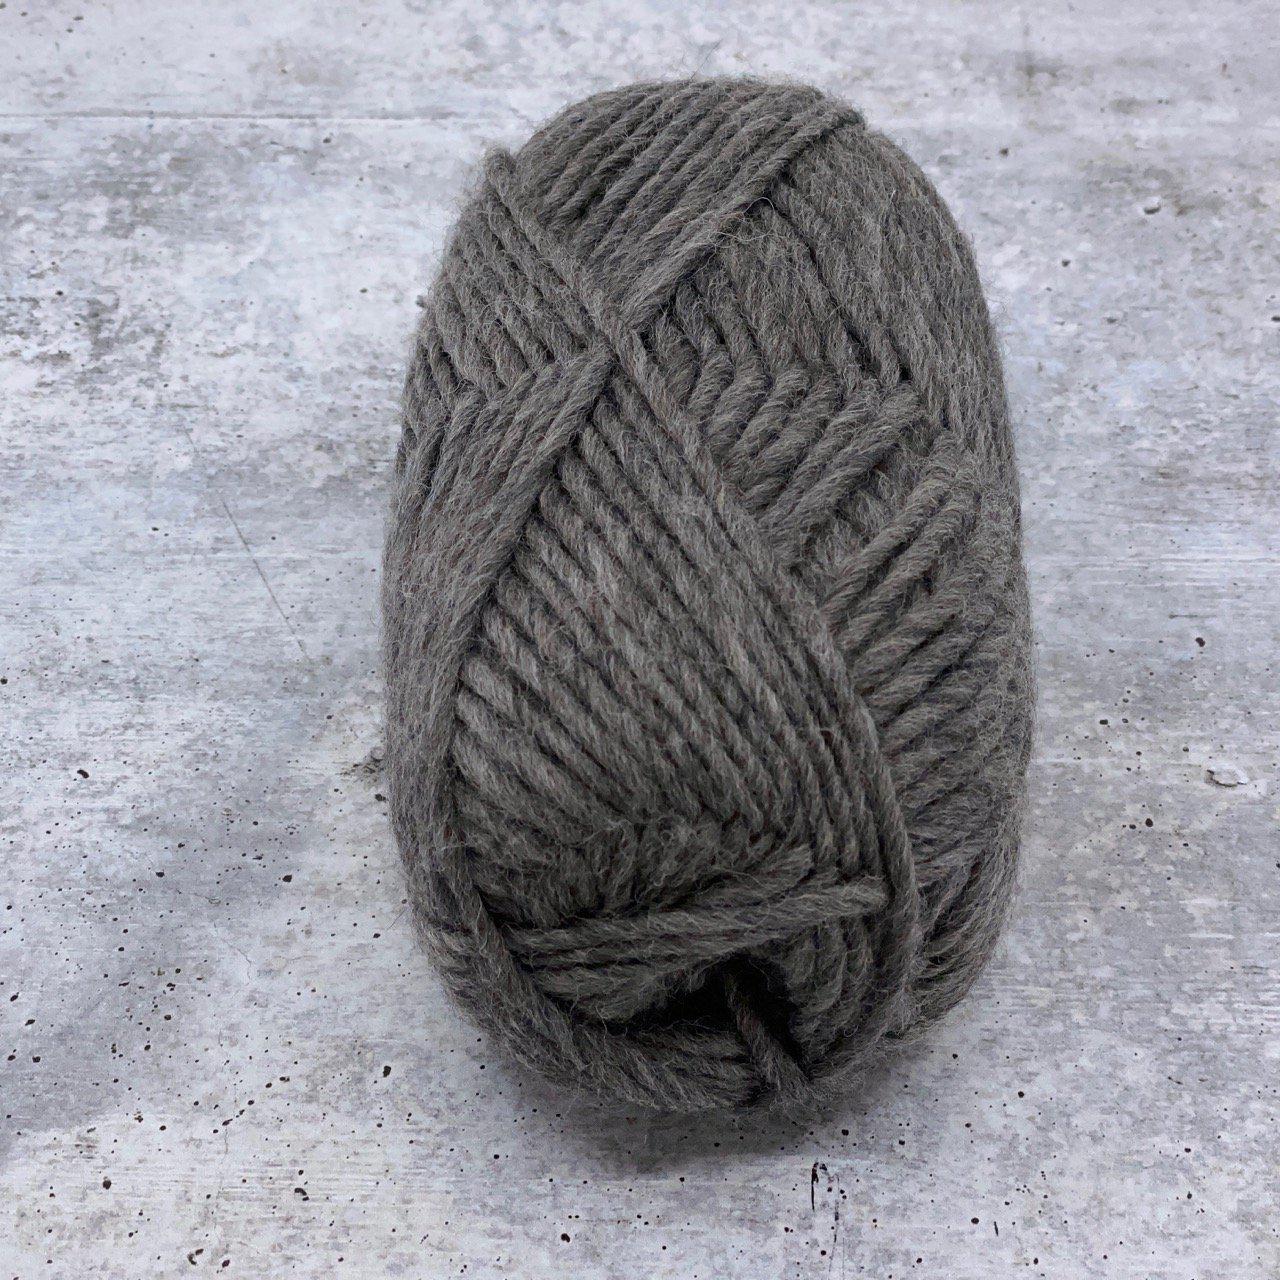 Wool Roving Assortment - Vintage